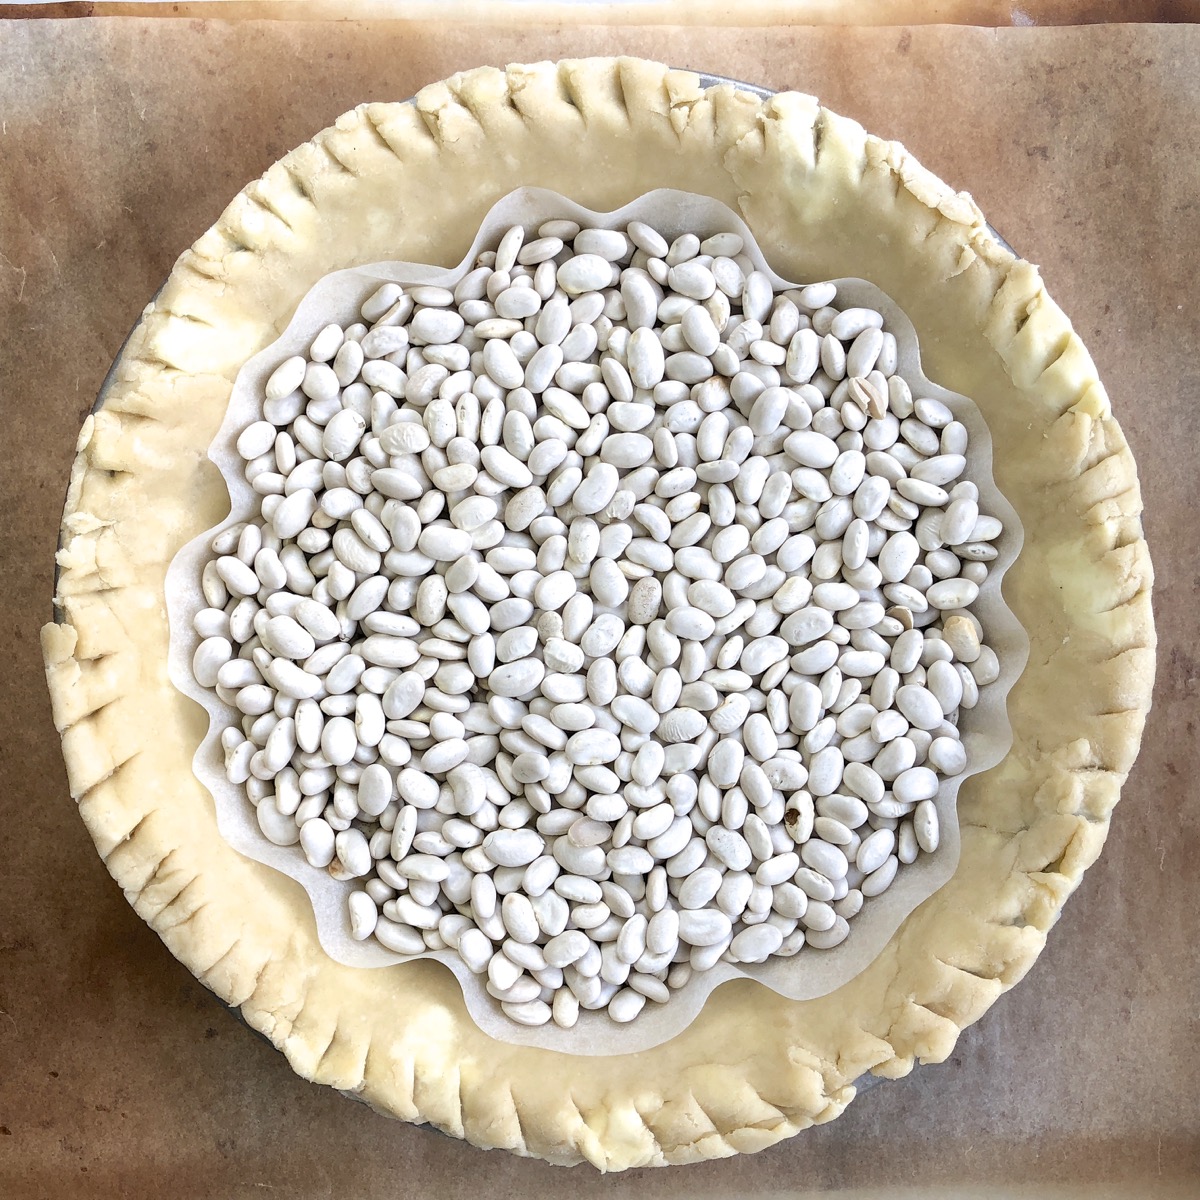 How to bake a better pumpkin pie via @kingarthurflour